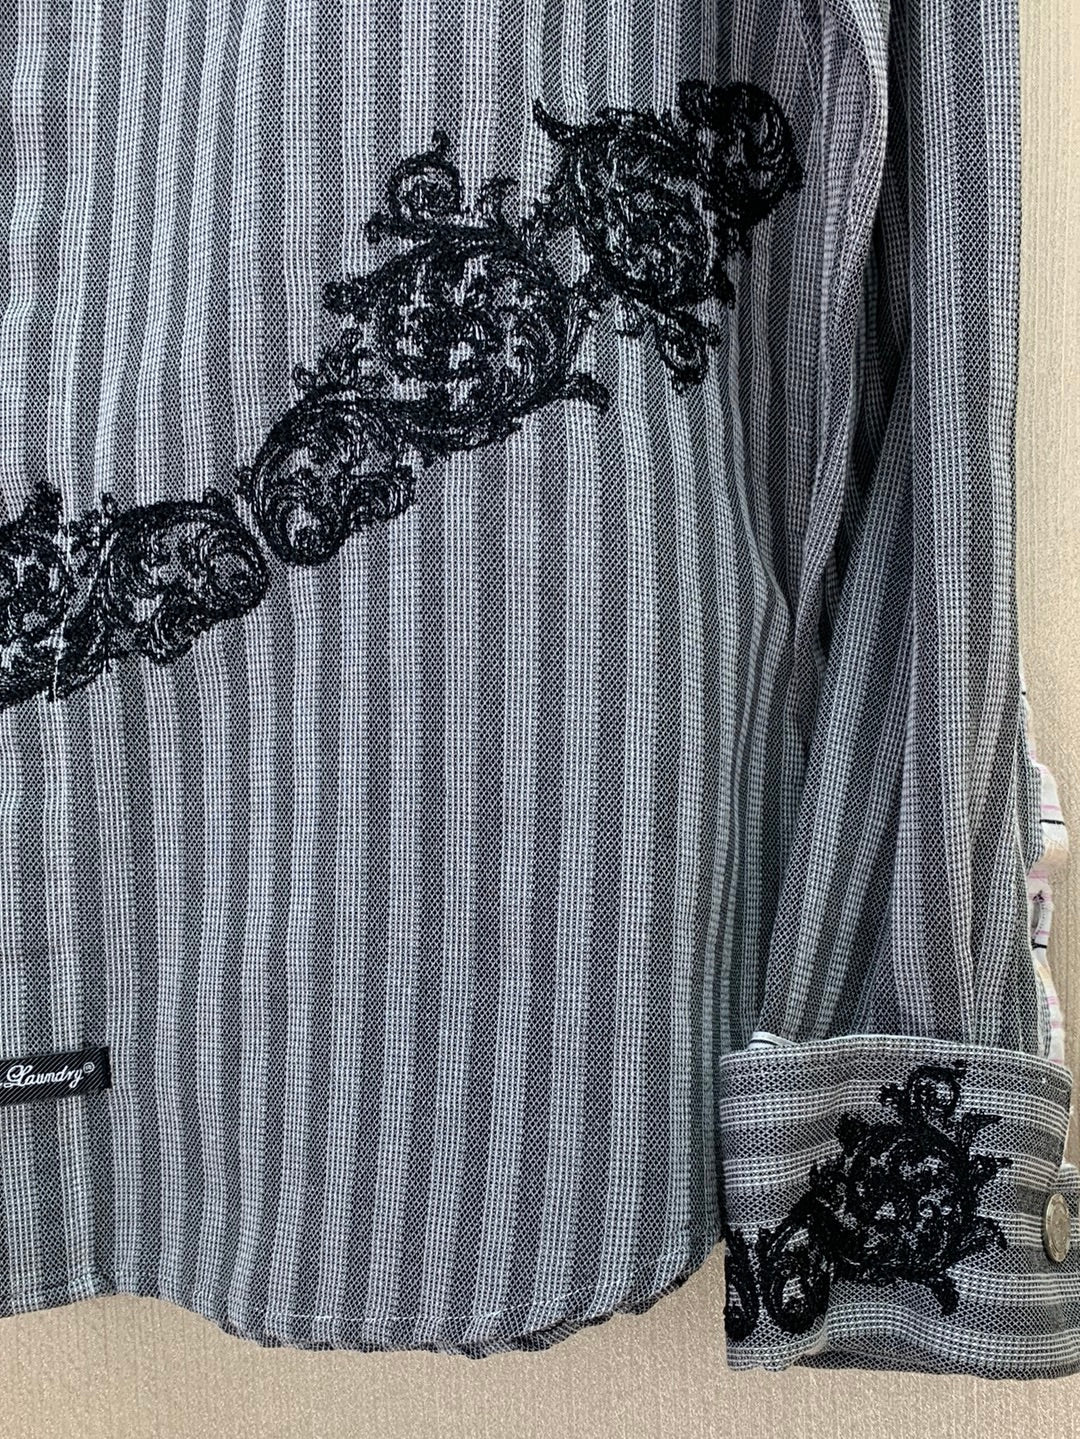 ENGLISH LAUNDRY black white stripe Hand Sewn Embroidered Shirt - M